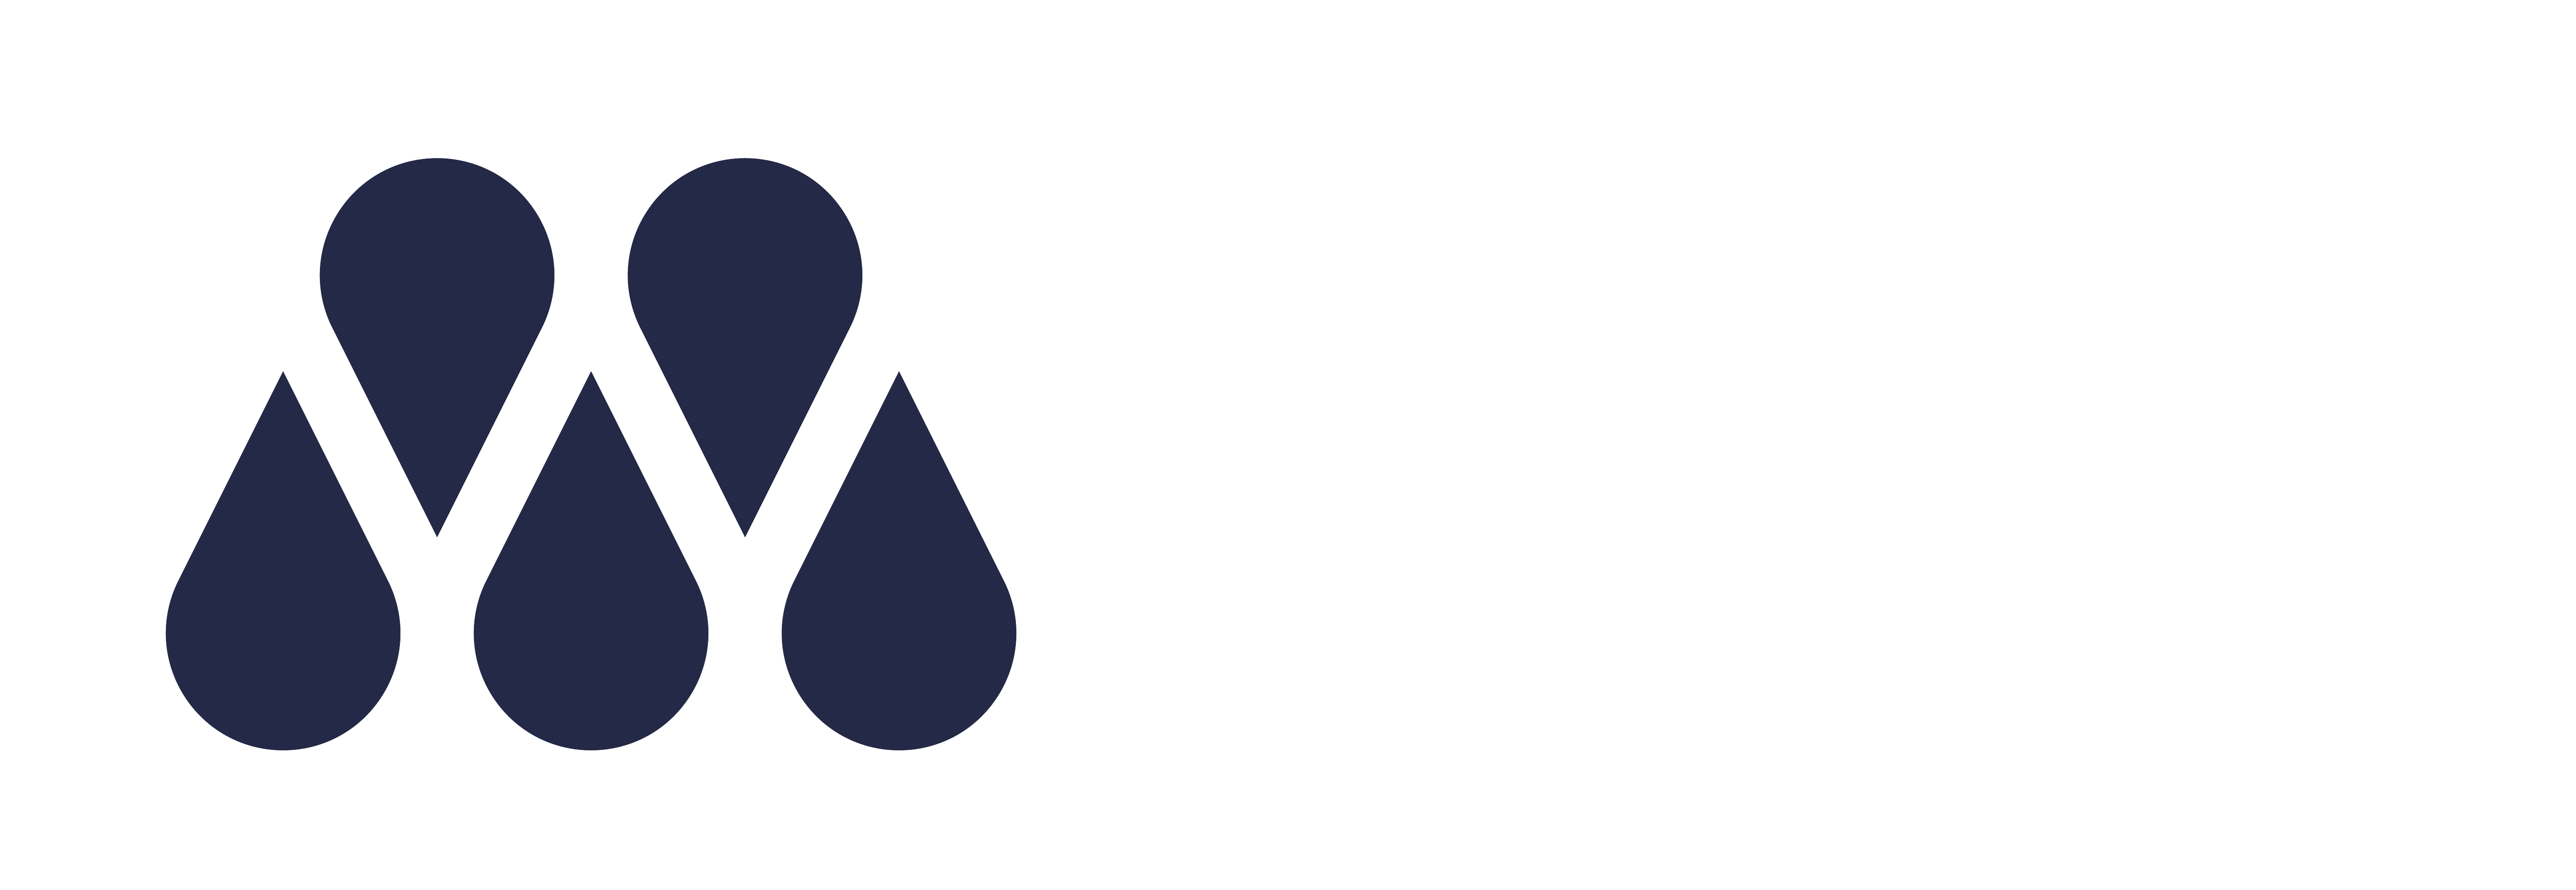 MixerDirect-Logo_Horizontal-Stacked-White-MXDProcess